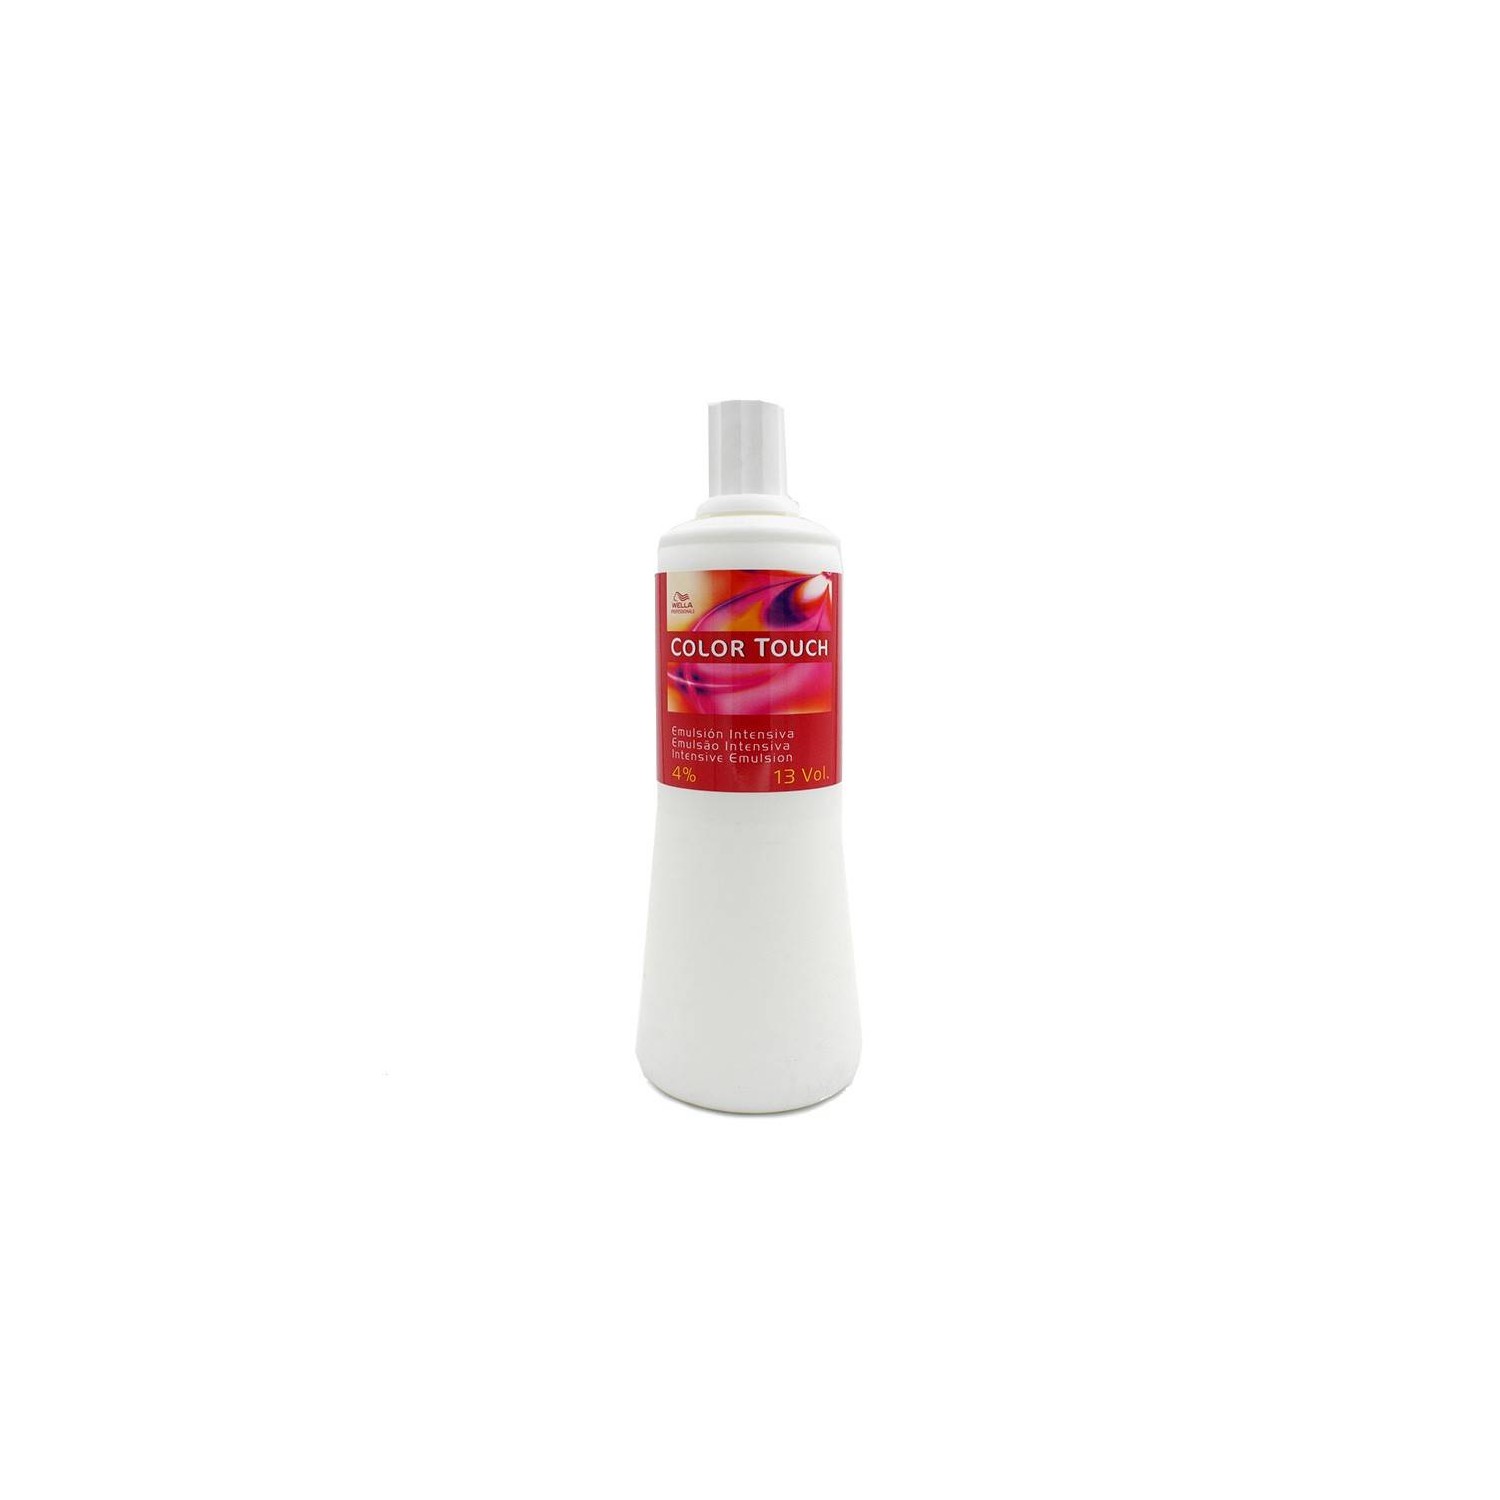 Wella Color Touch Emulsion 13vol (4%)1000 ml